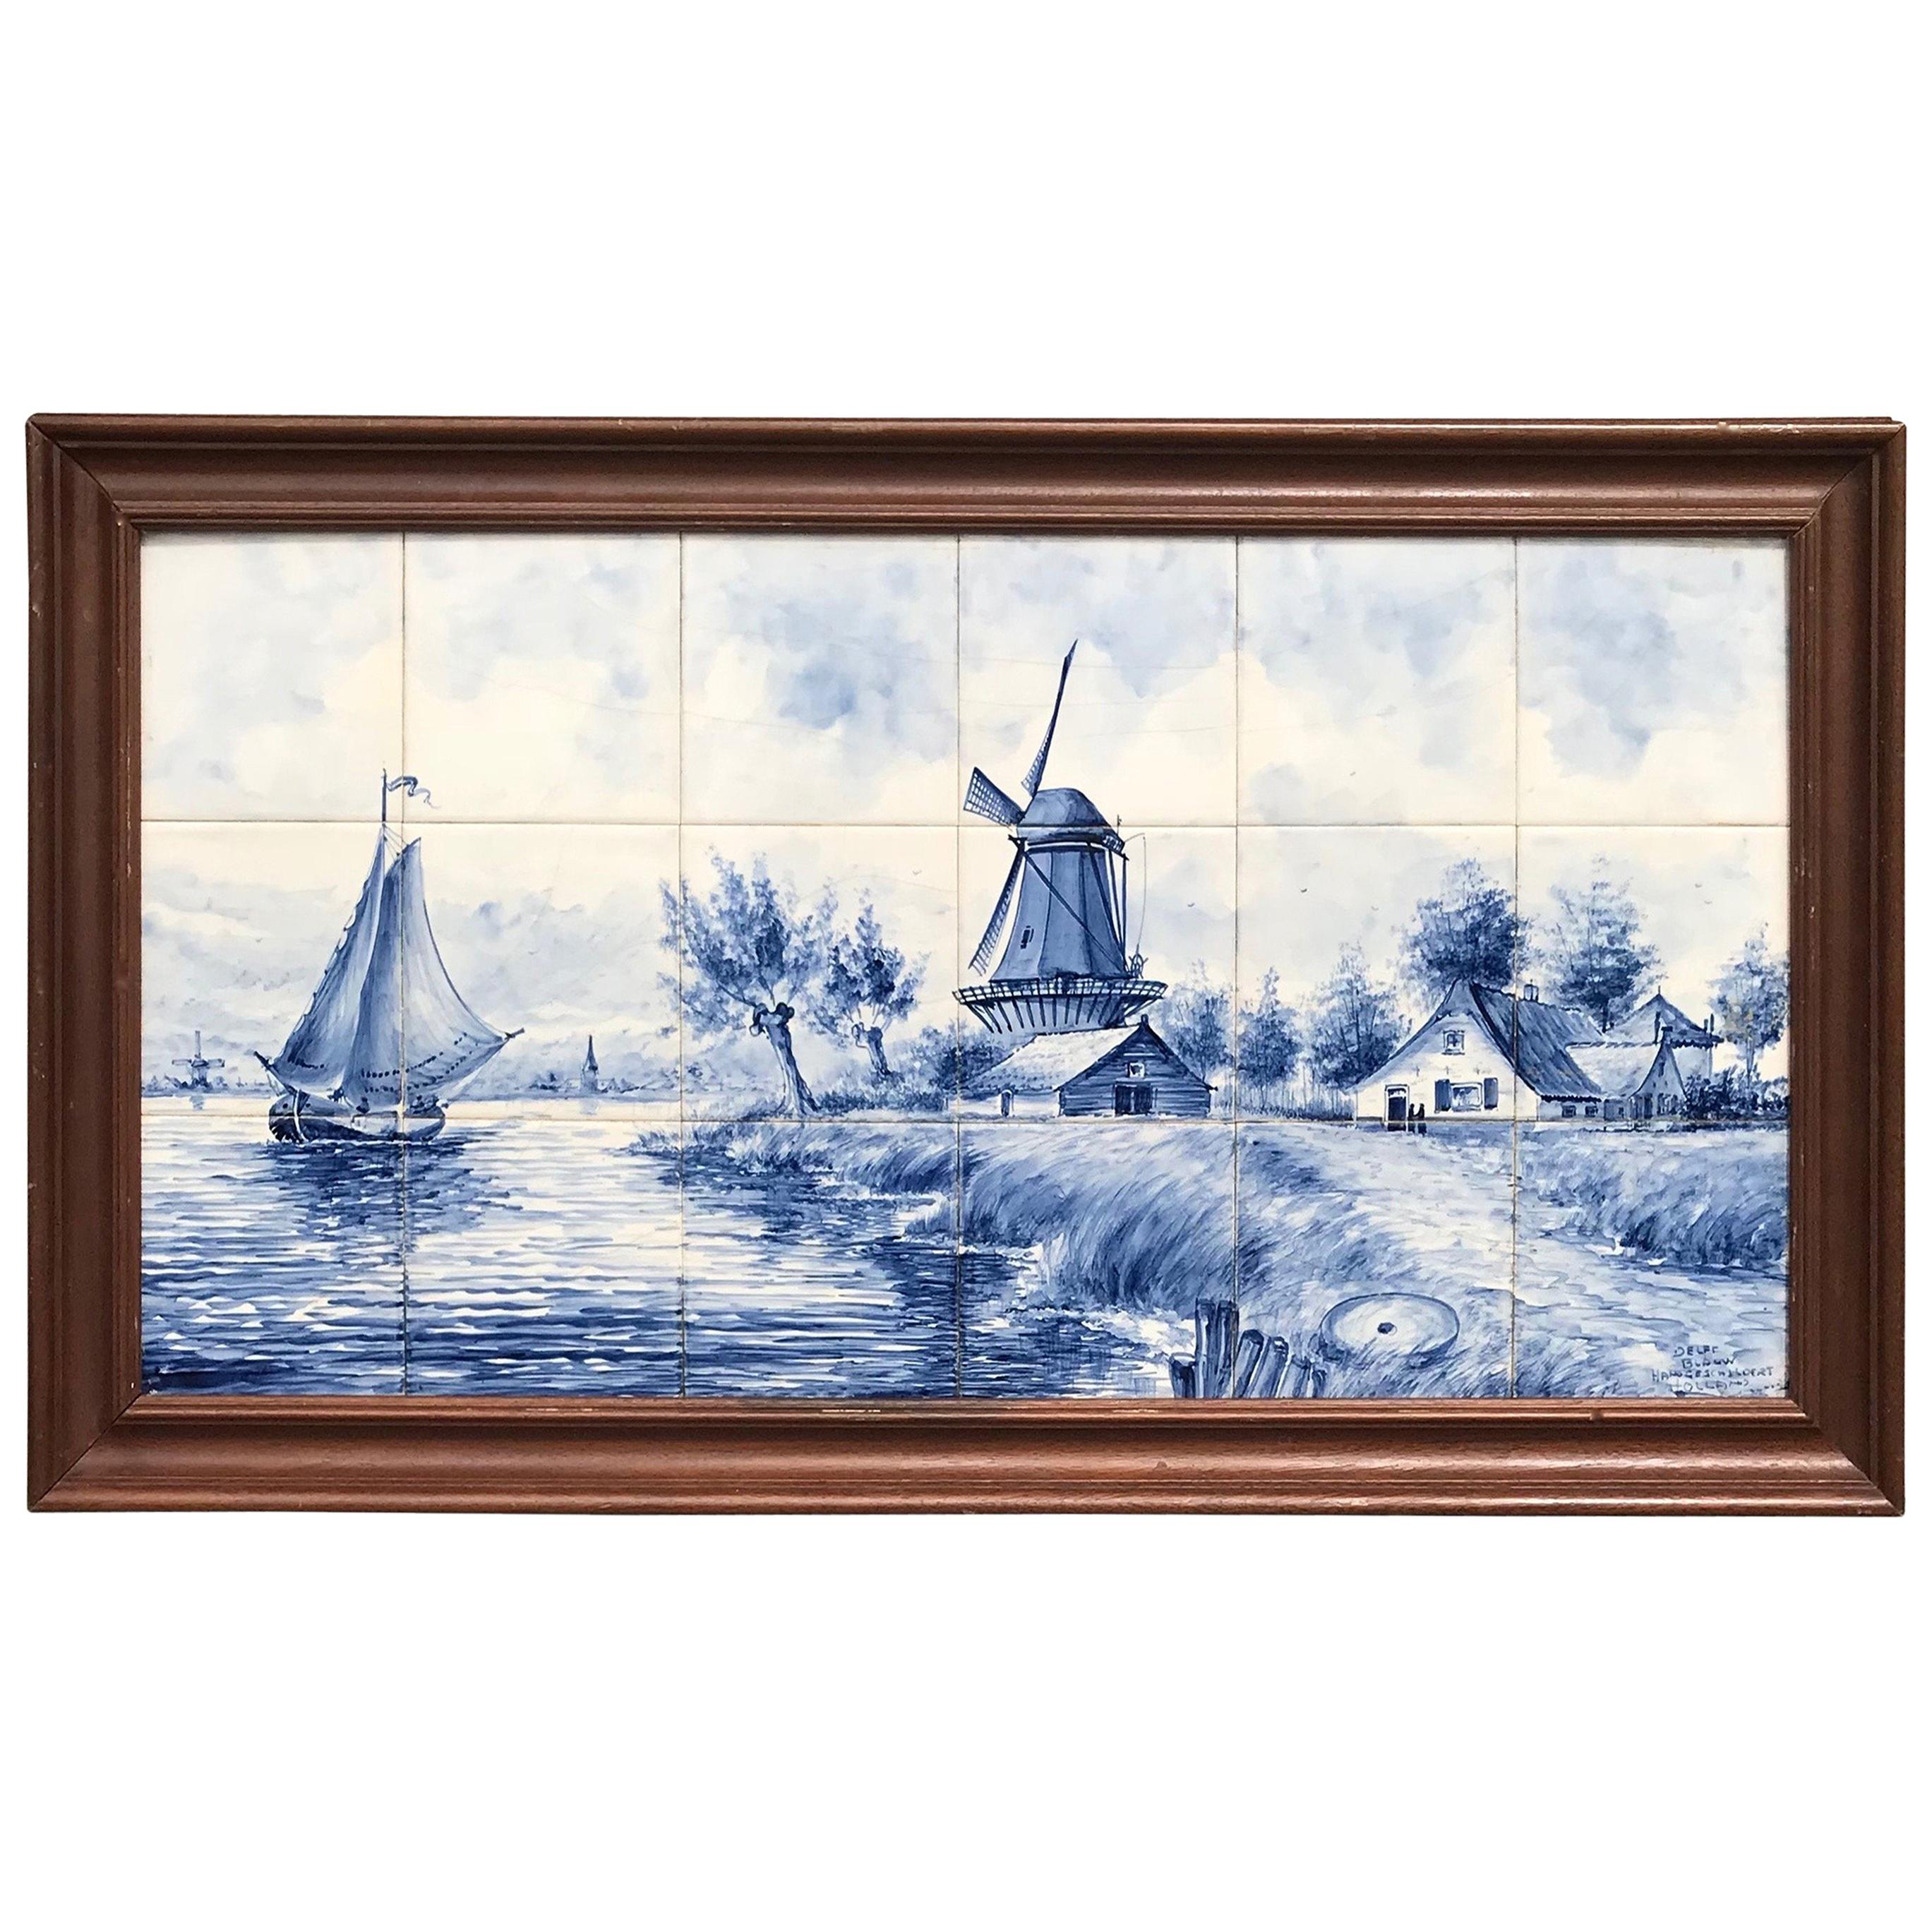 Large Midcentury Made Delft Blue Tile Tableau / Wall Plaque with Dutch Landscape